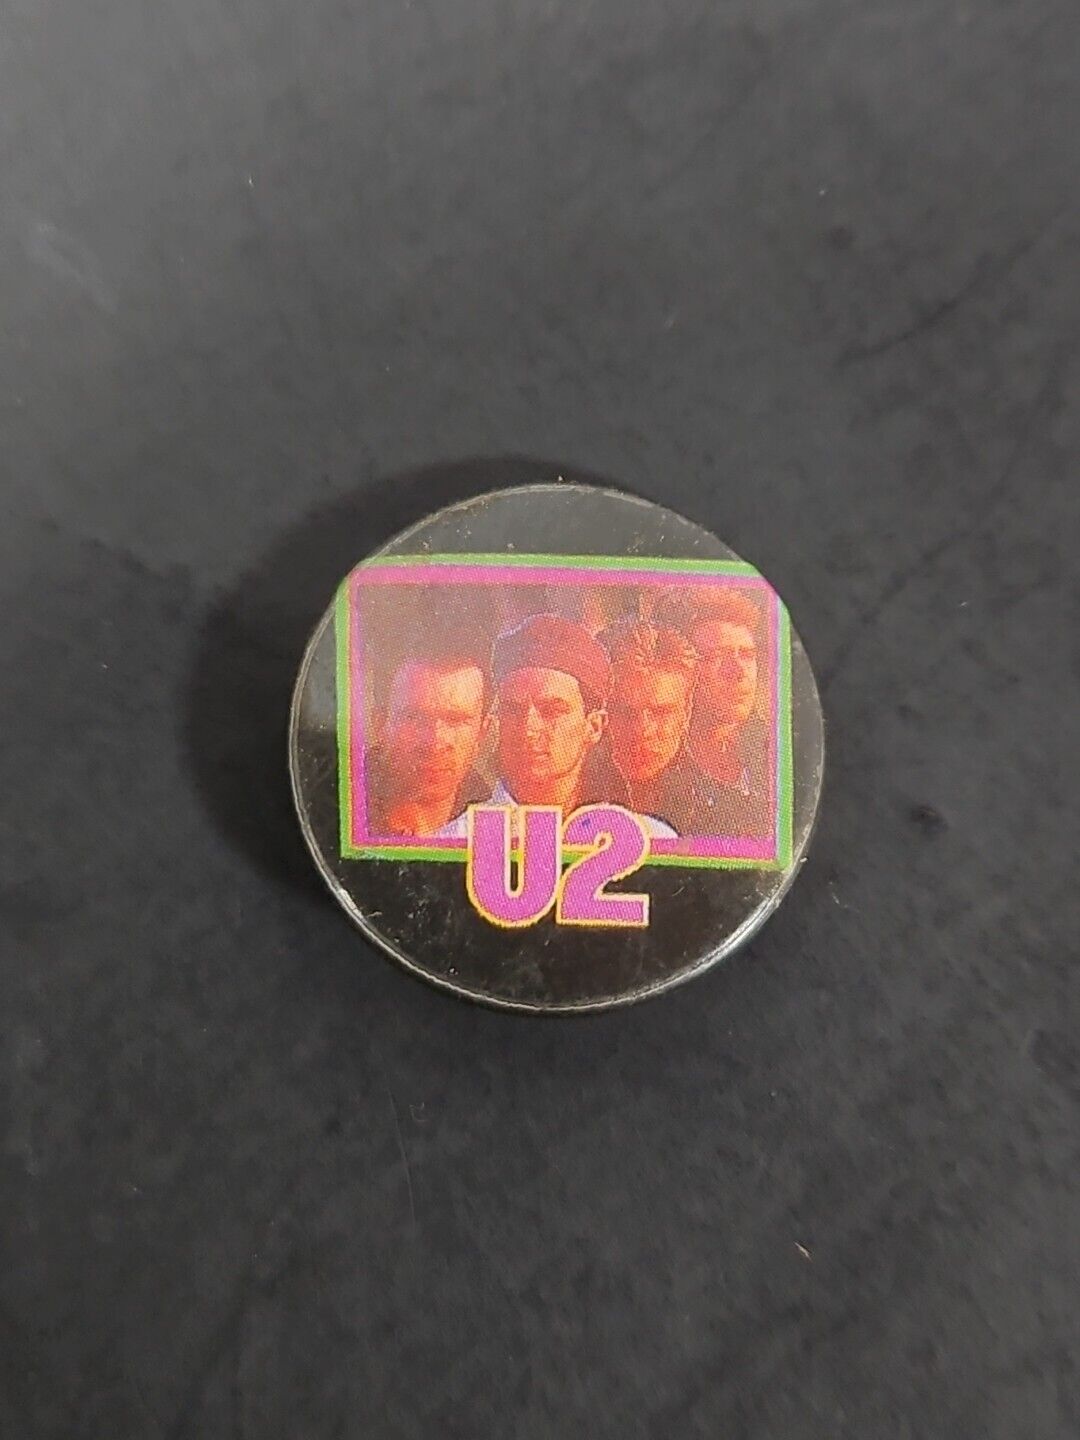 Vintage Original ~ U2 ~ Group Band Concert Tour Music Pin Button